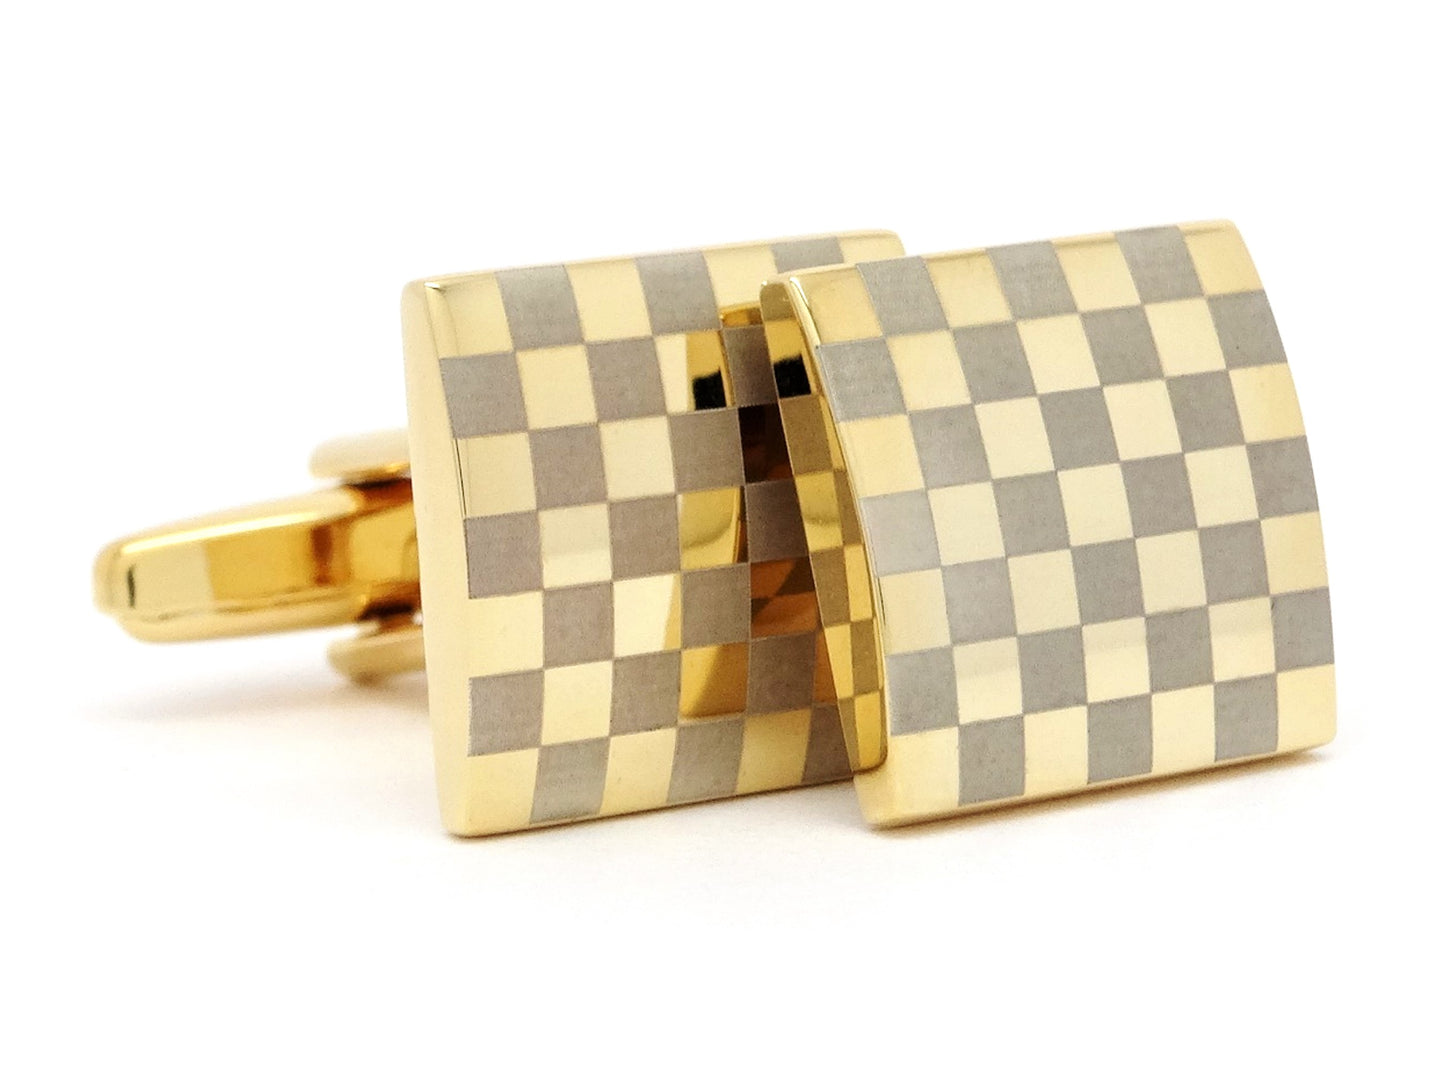 Yellow gold chessboard design cufflinks DISPLAY